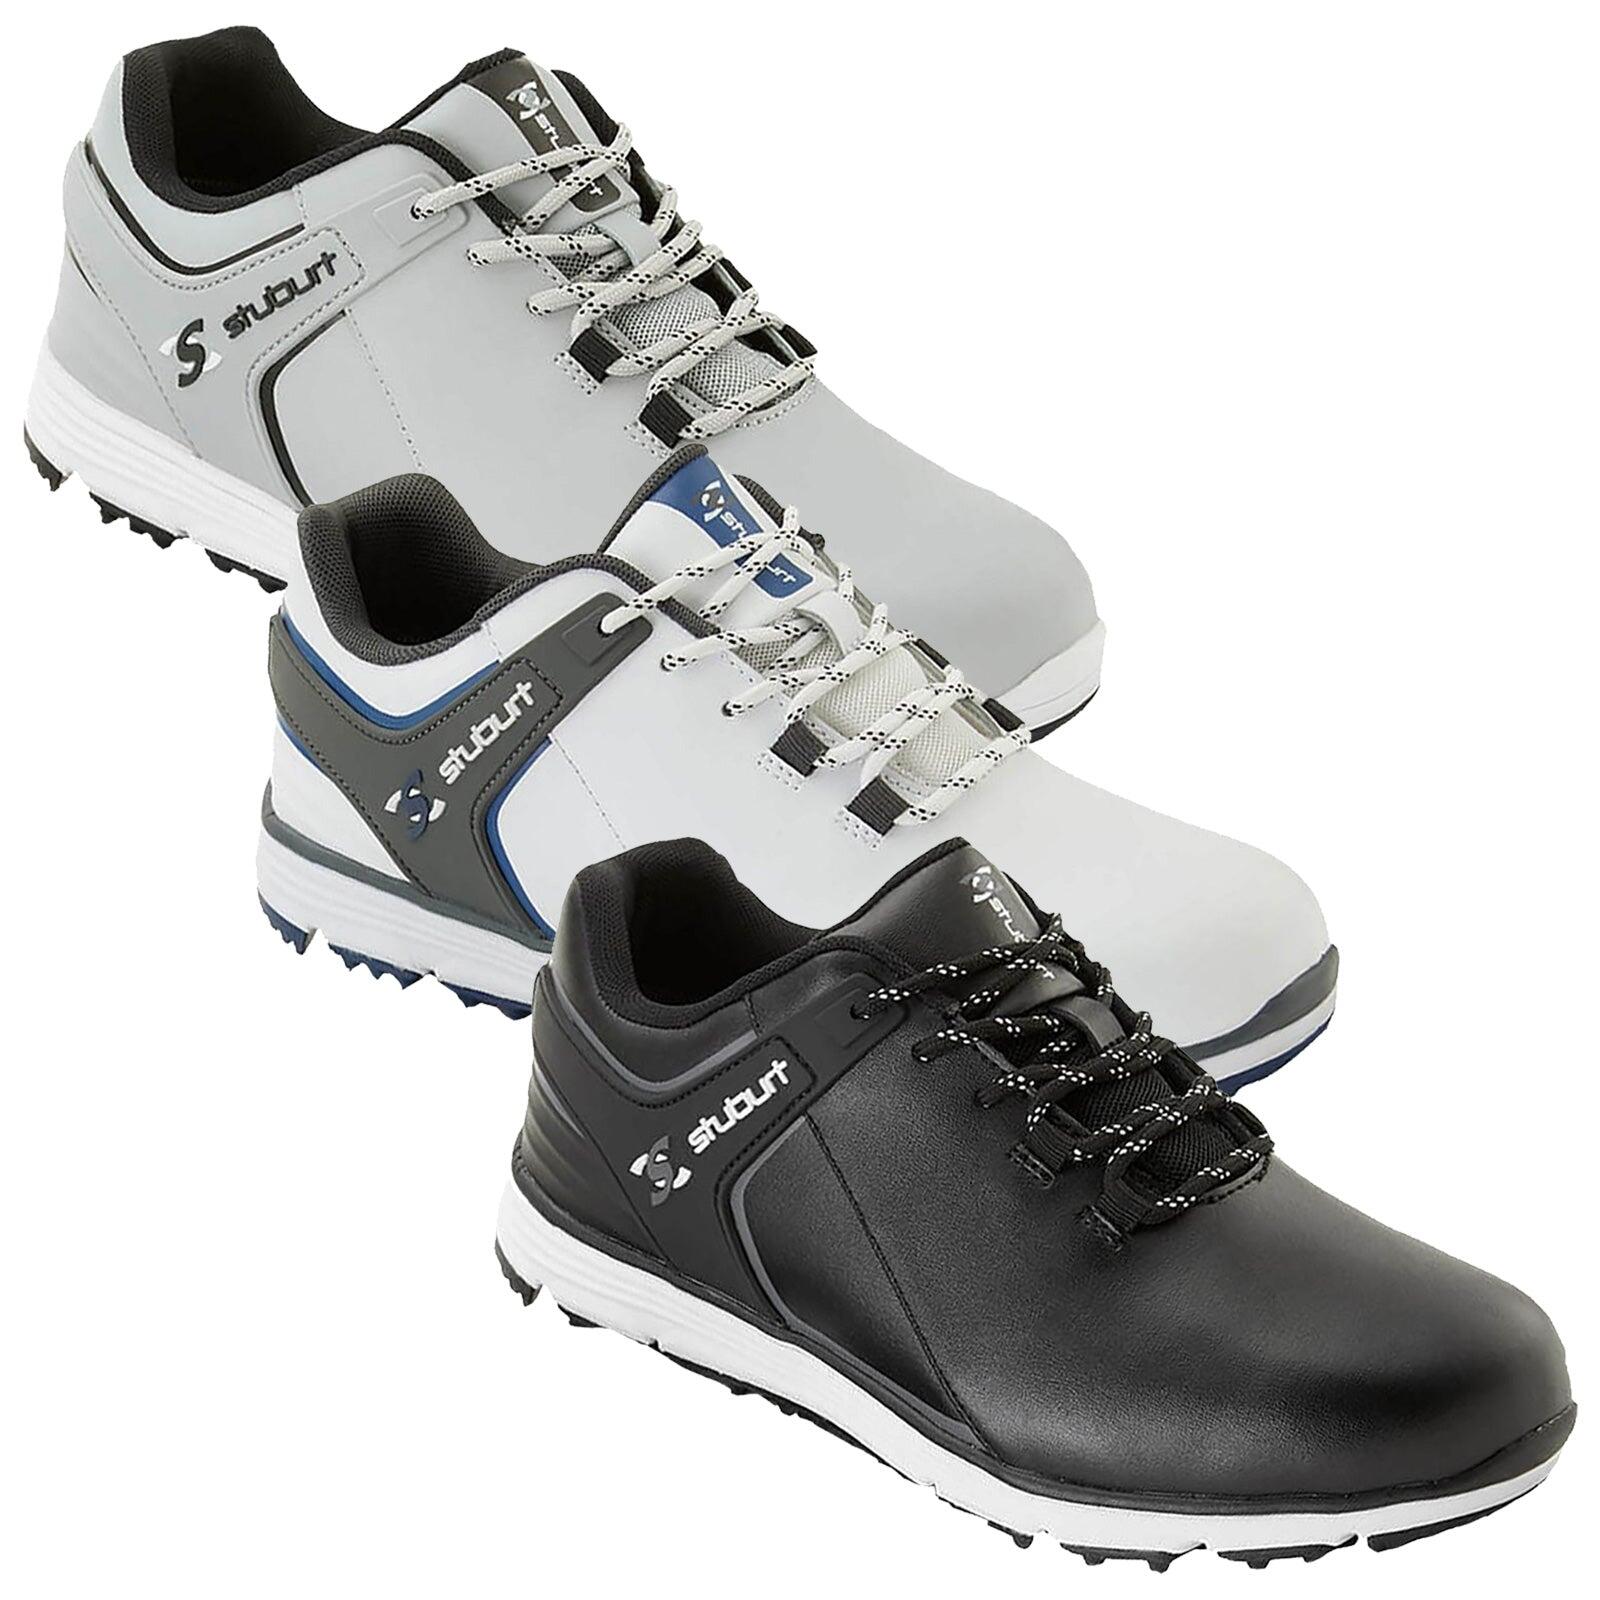 Stuburt Evolve 3.0 Spikeless Golf Shoes - White 2/5